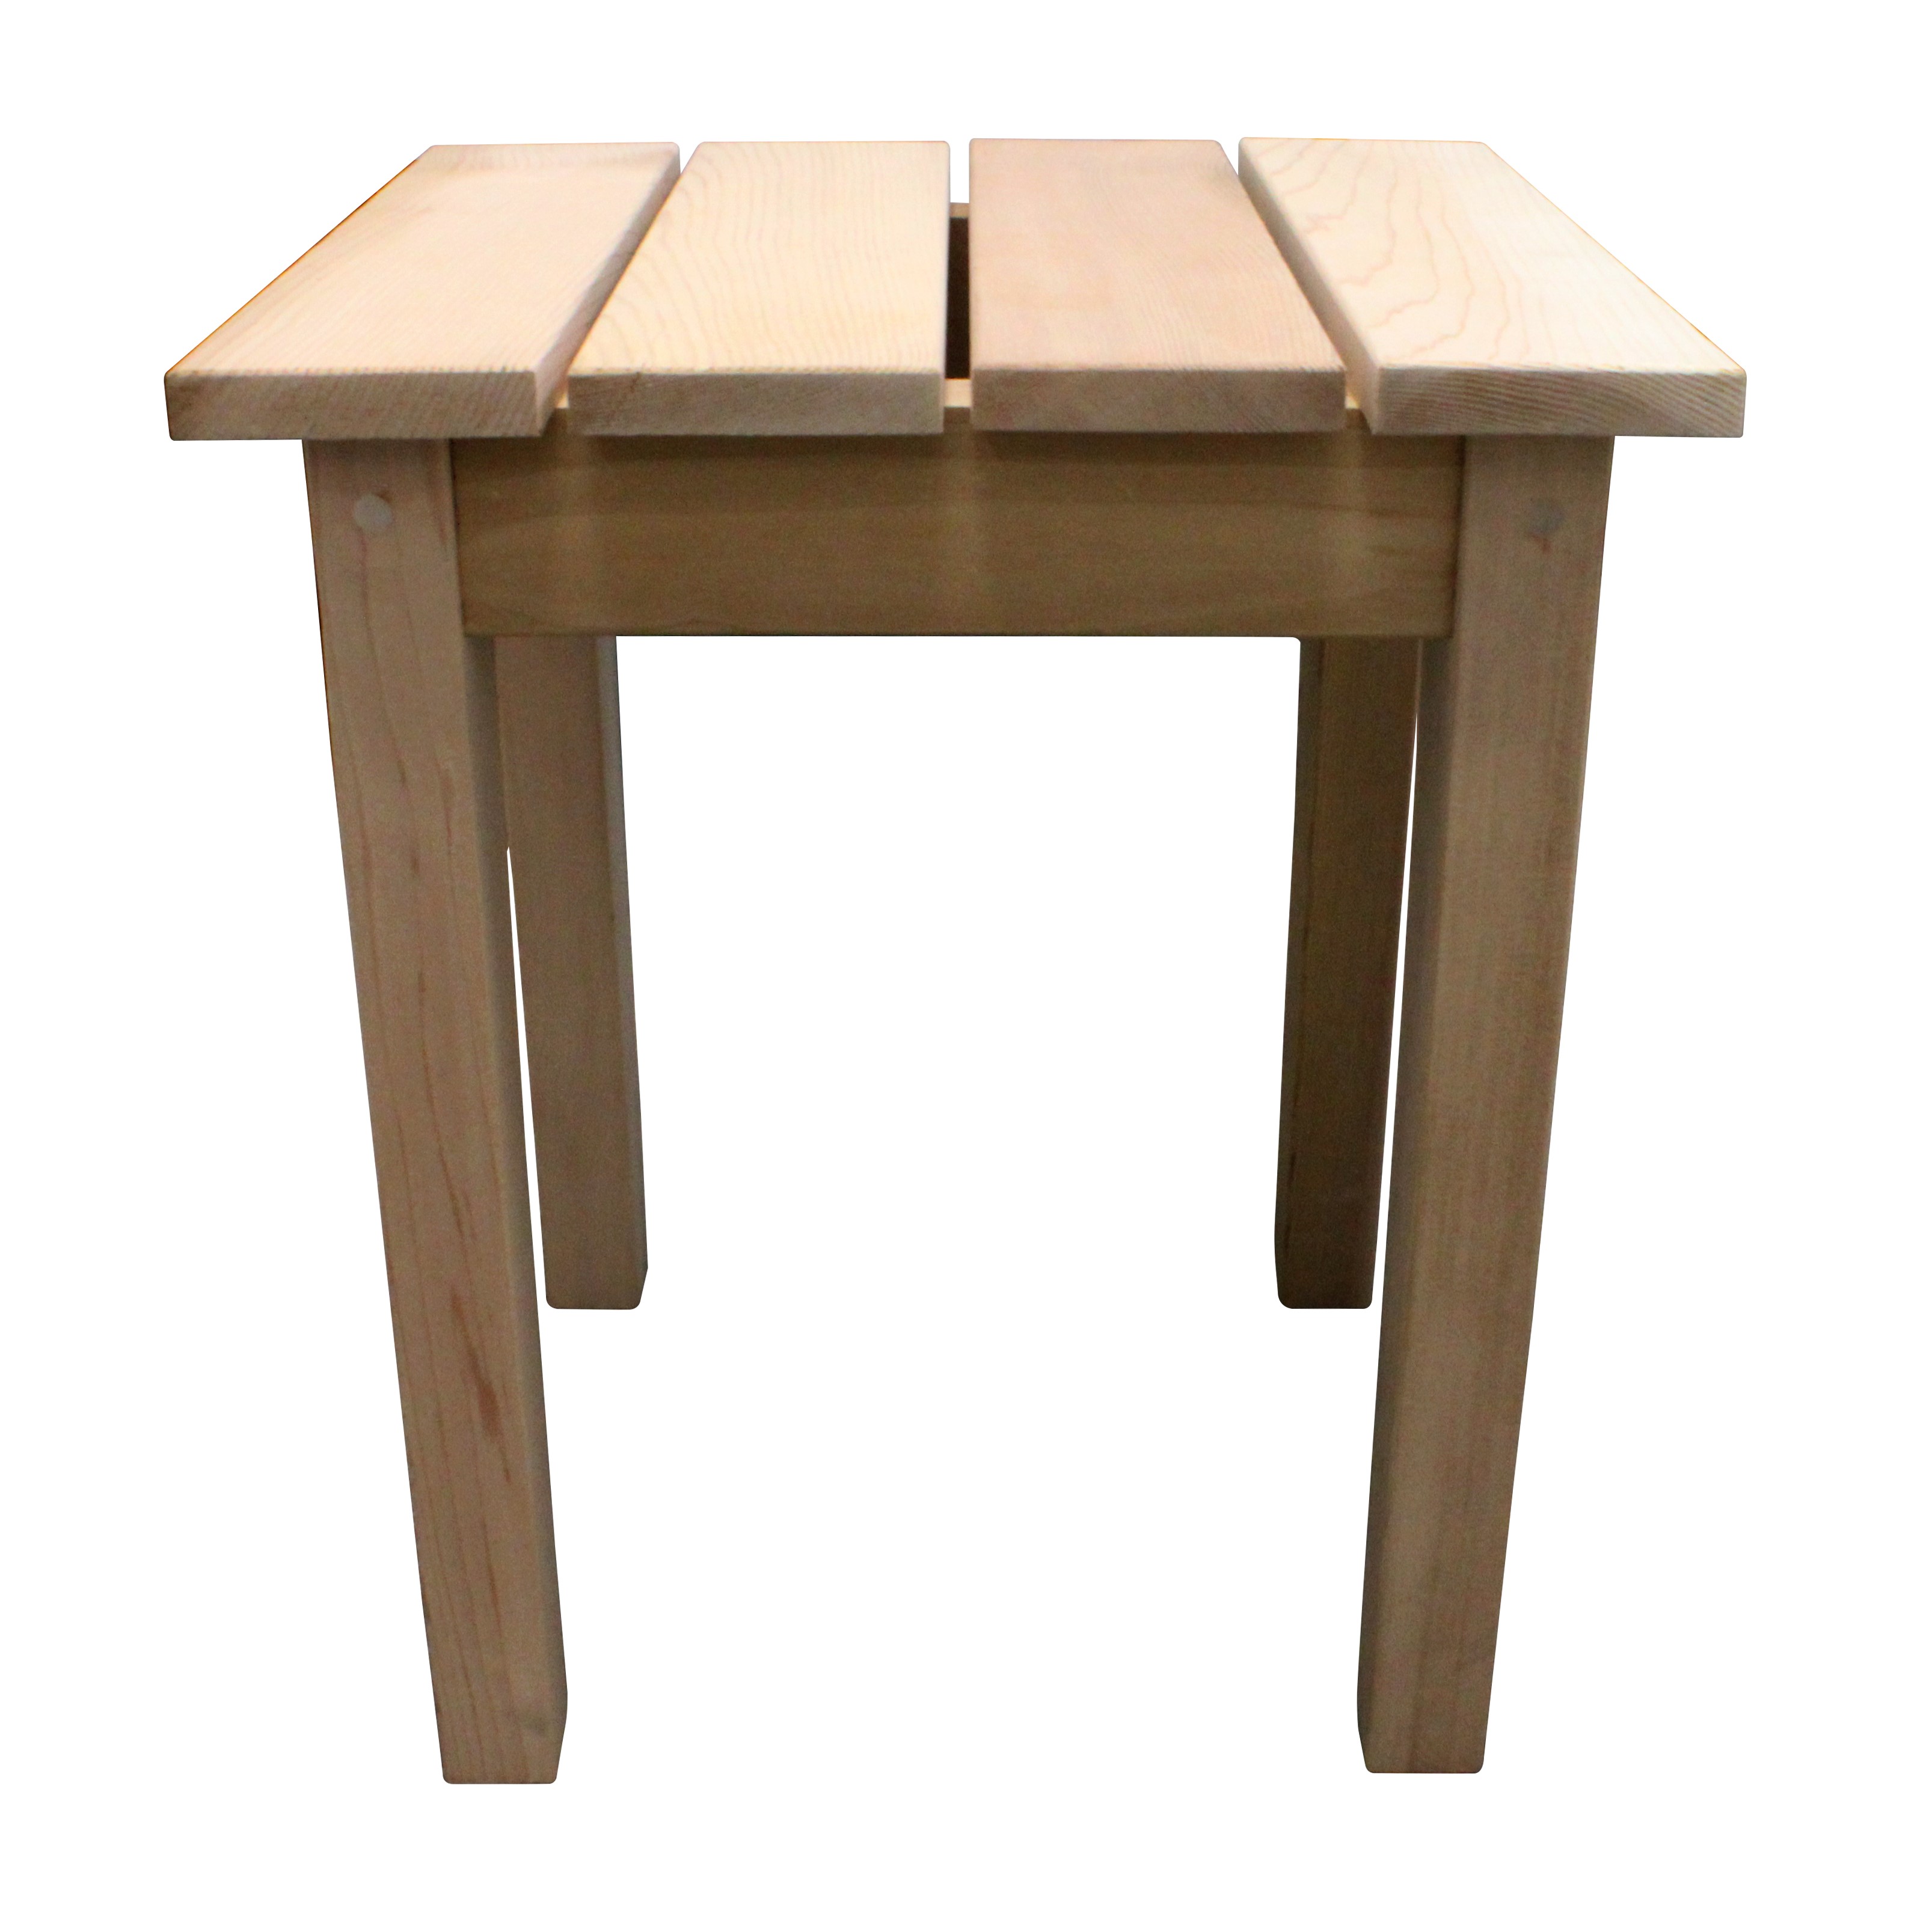 Handcrafted Cedar End Table - 100% Western Red Cedar